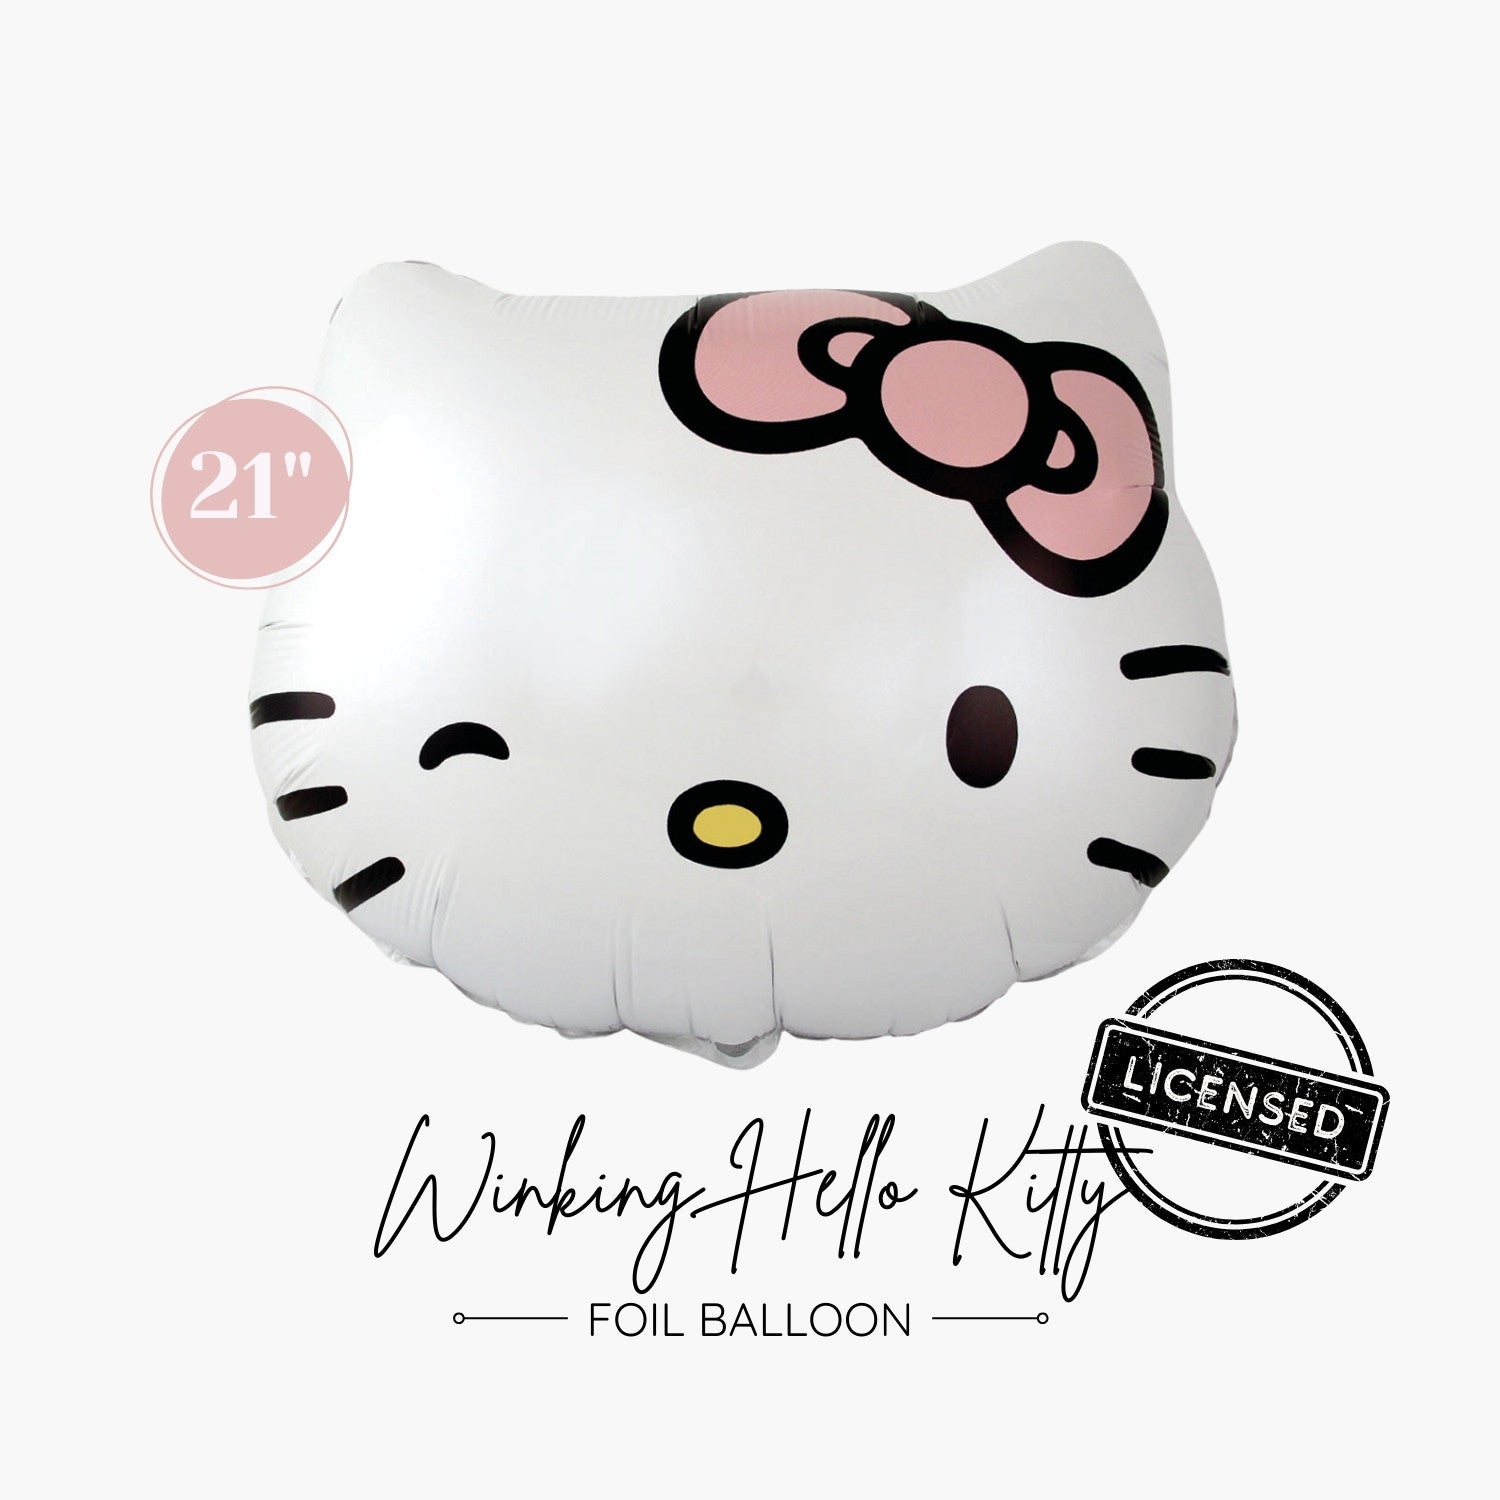 Licensed Winking Hello Kitty Foil Balloon 21" - Kawaii Girls Birthday Party Decorations